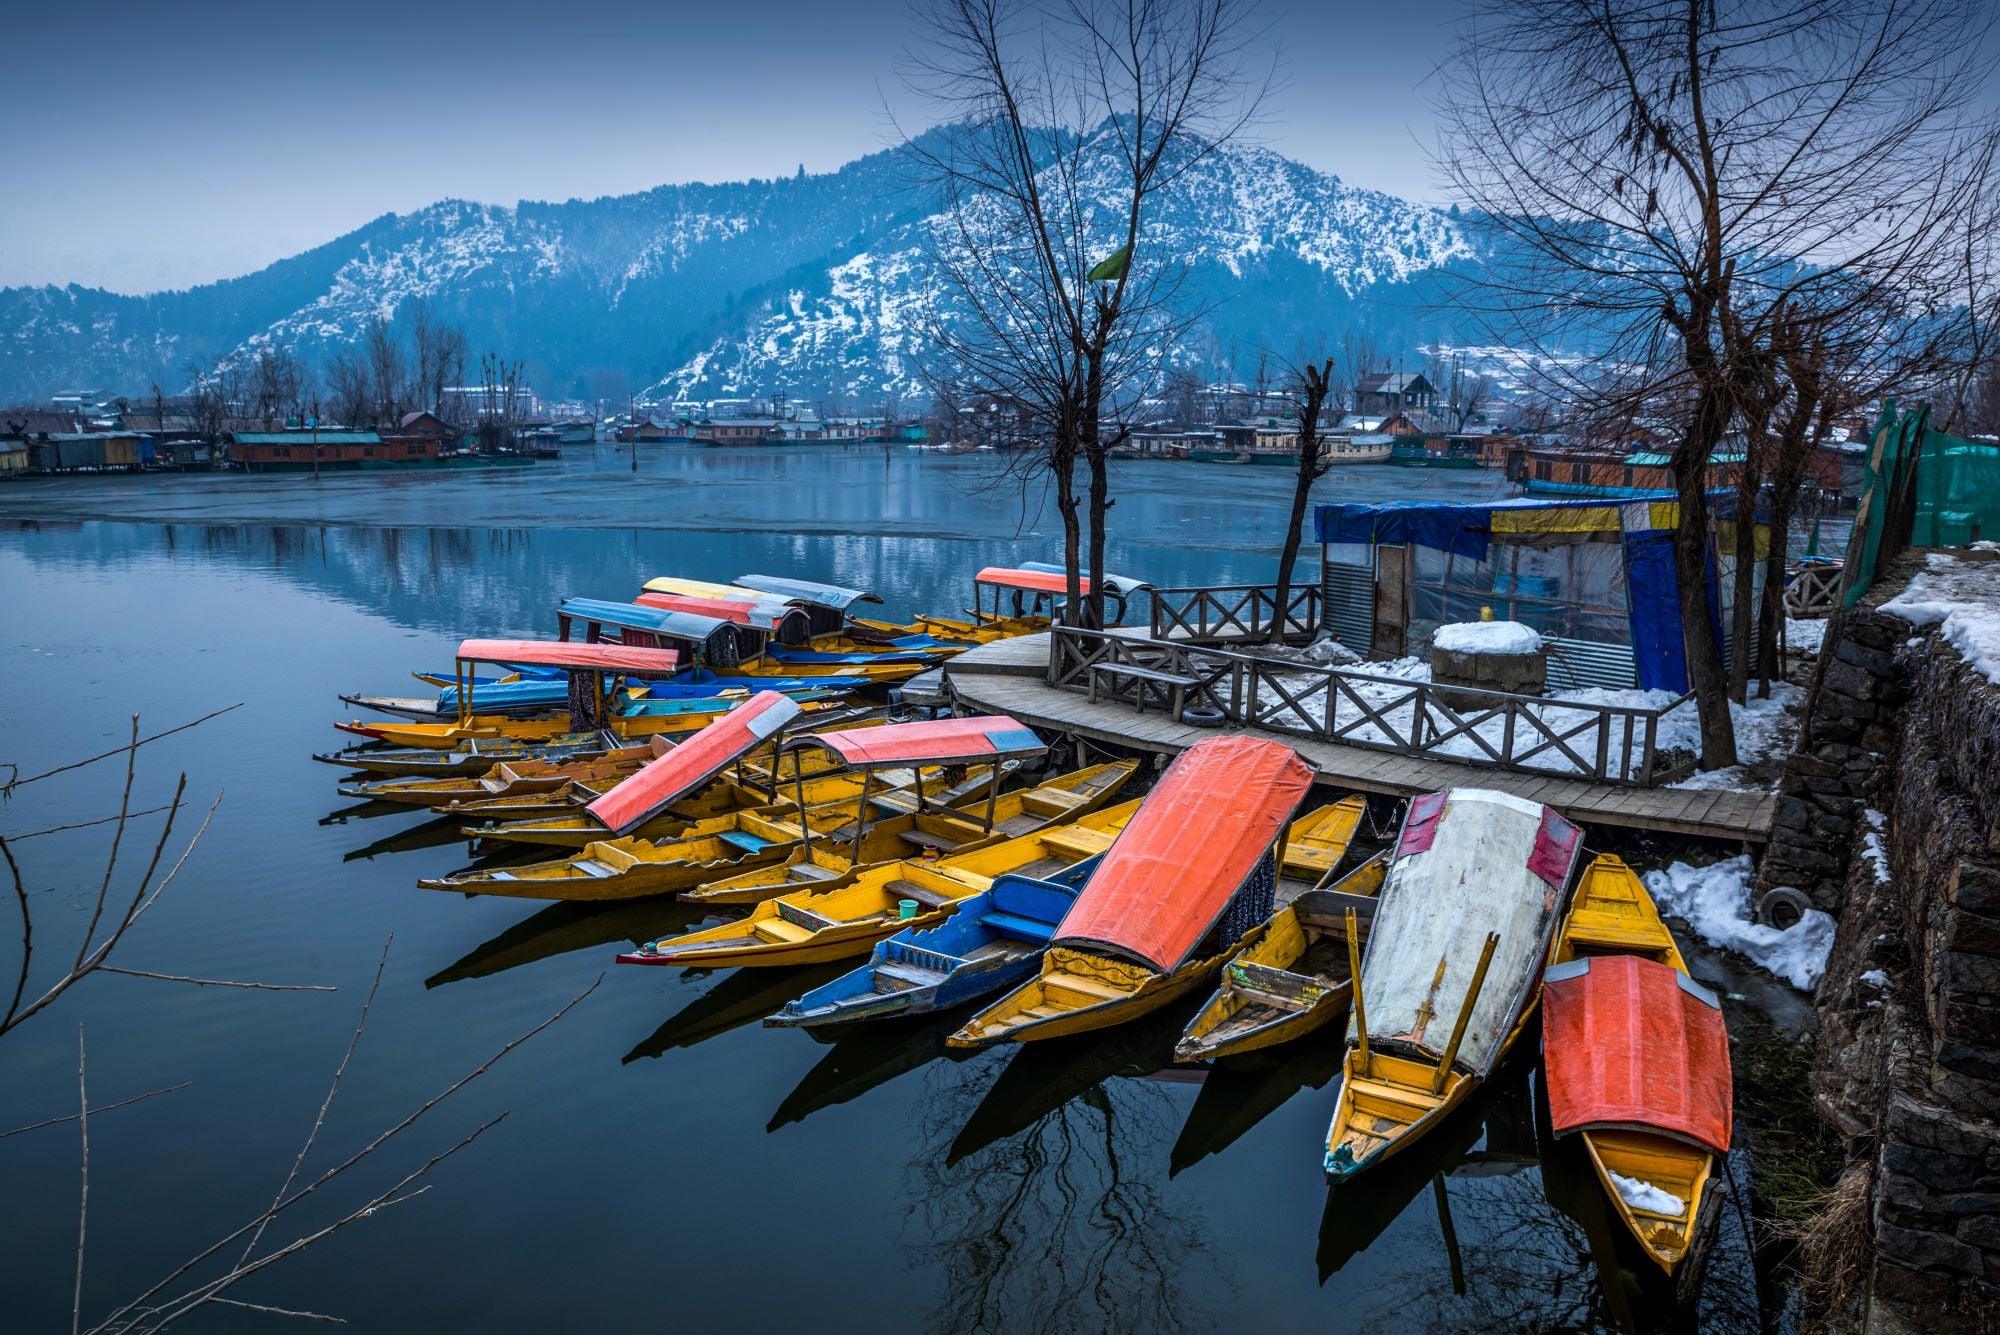 Srinagar, Jammu and Kashmir - The Heritage Artifacts